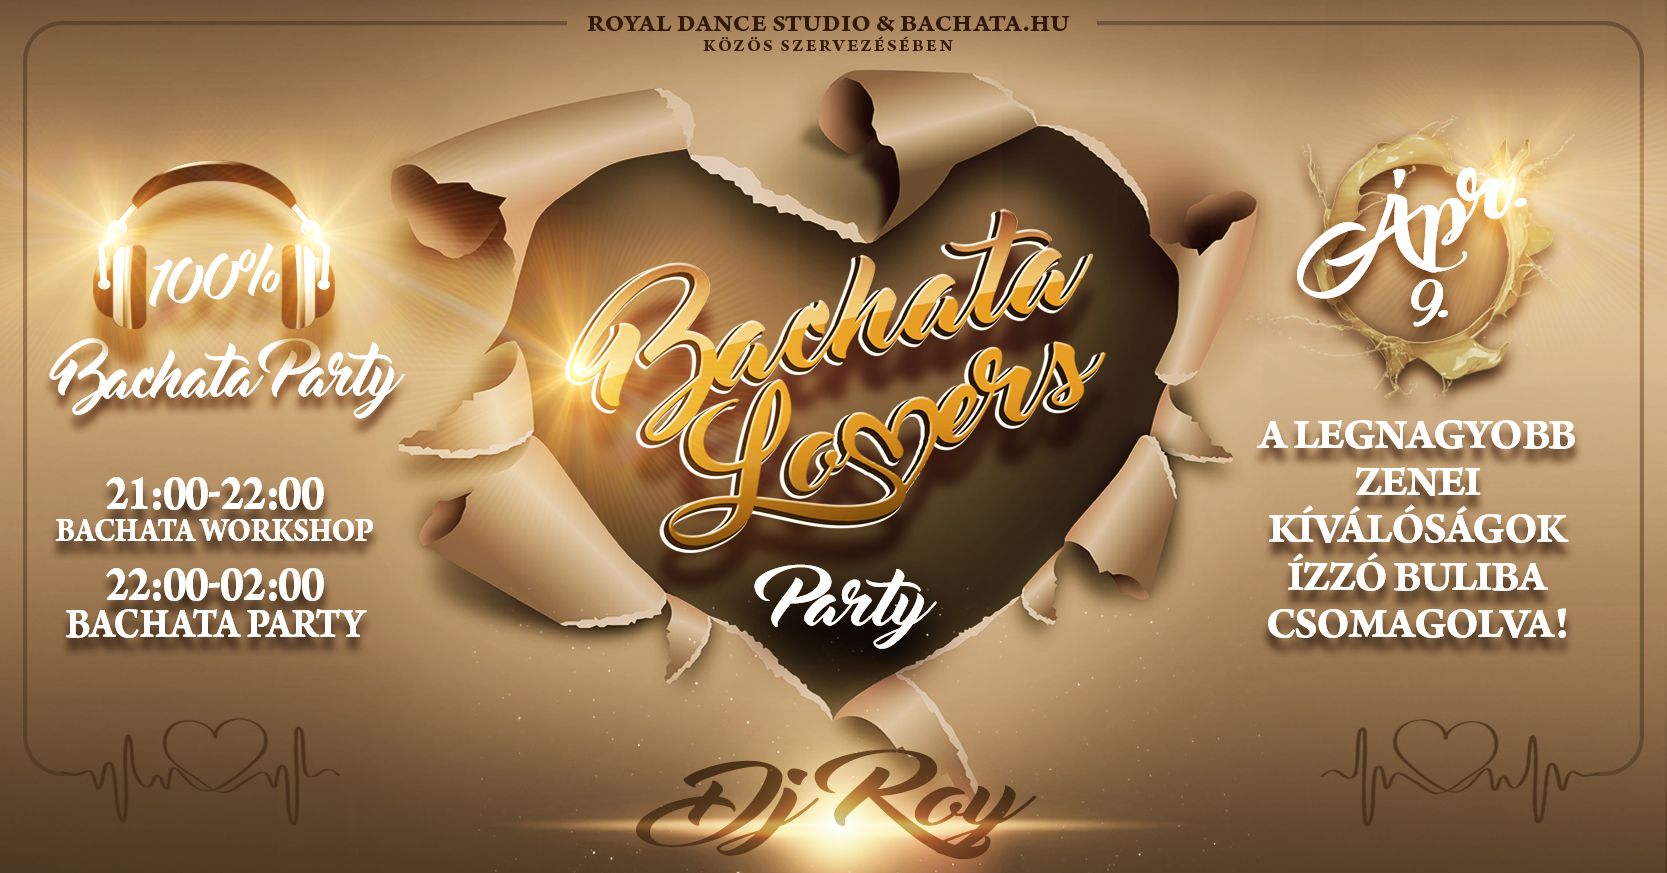 Bachata Lovers Party - április 9.